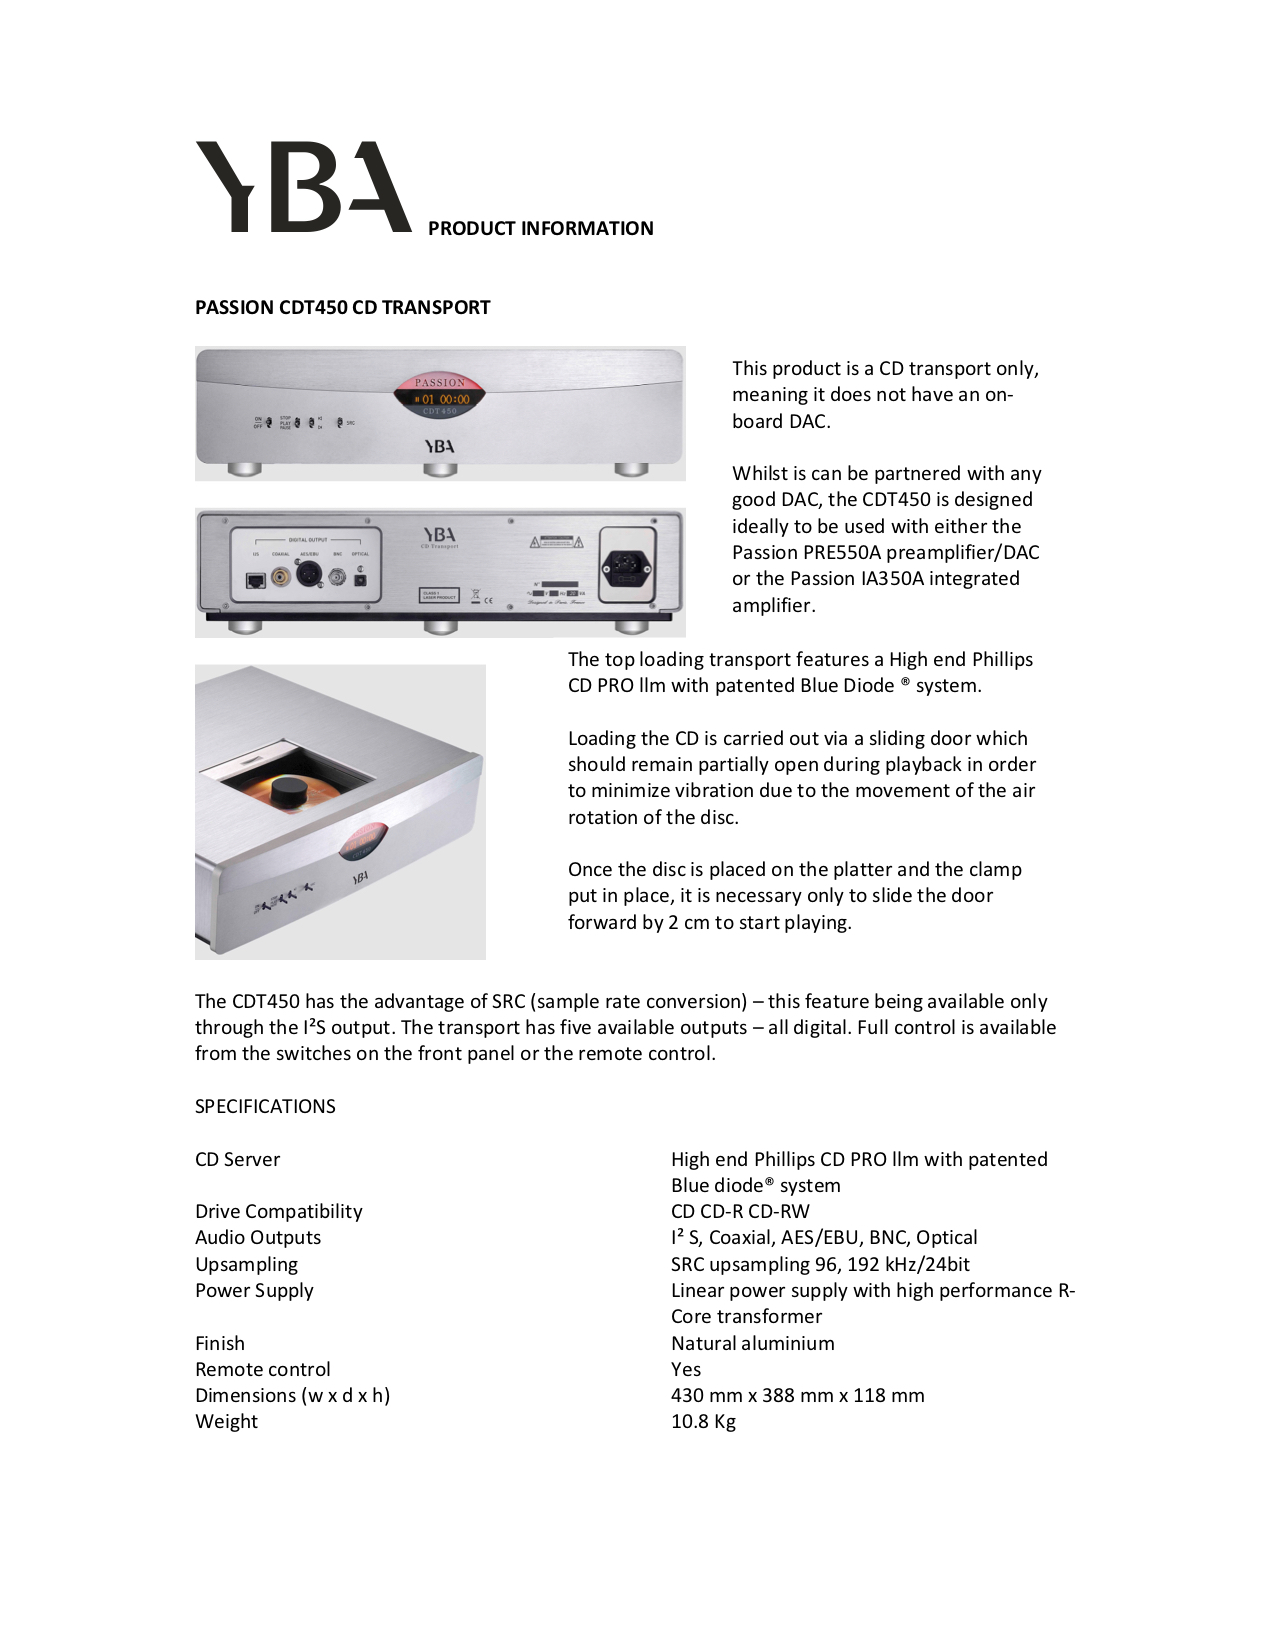 YBA Passion CDT450 Info Sheet - Norman Audio